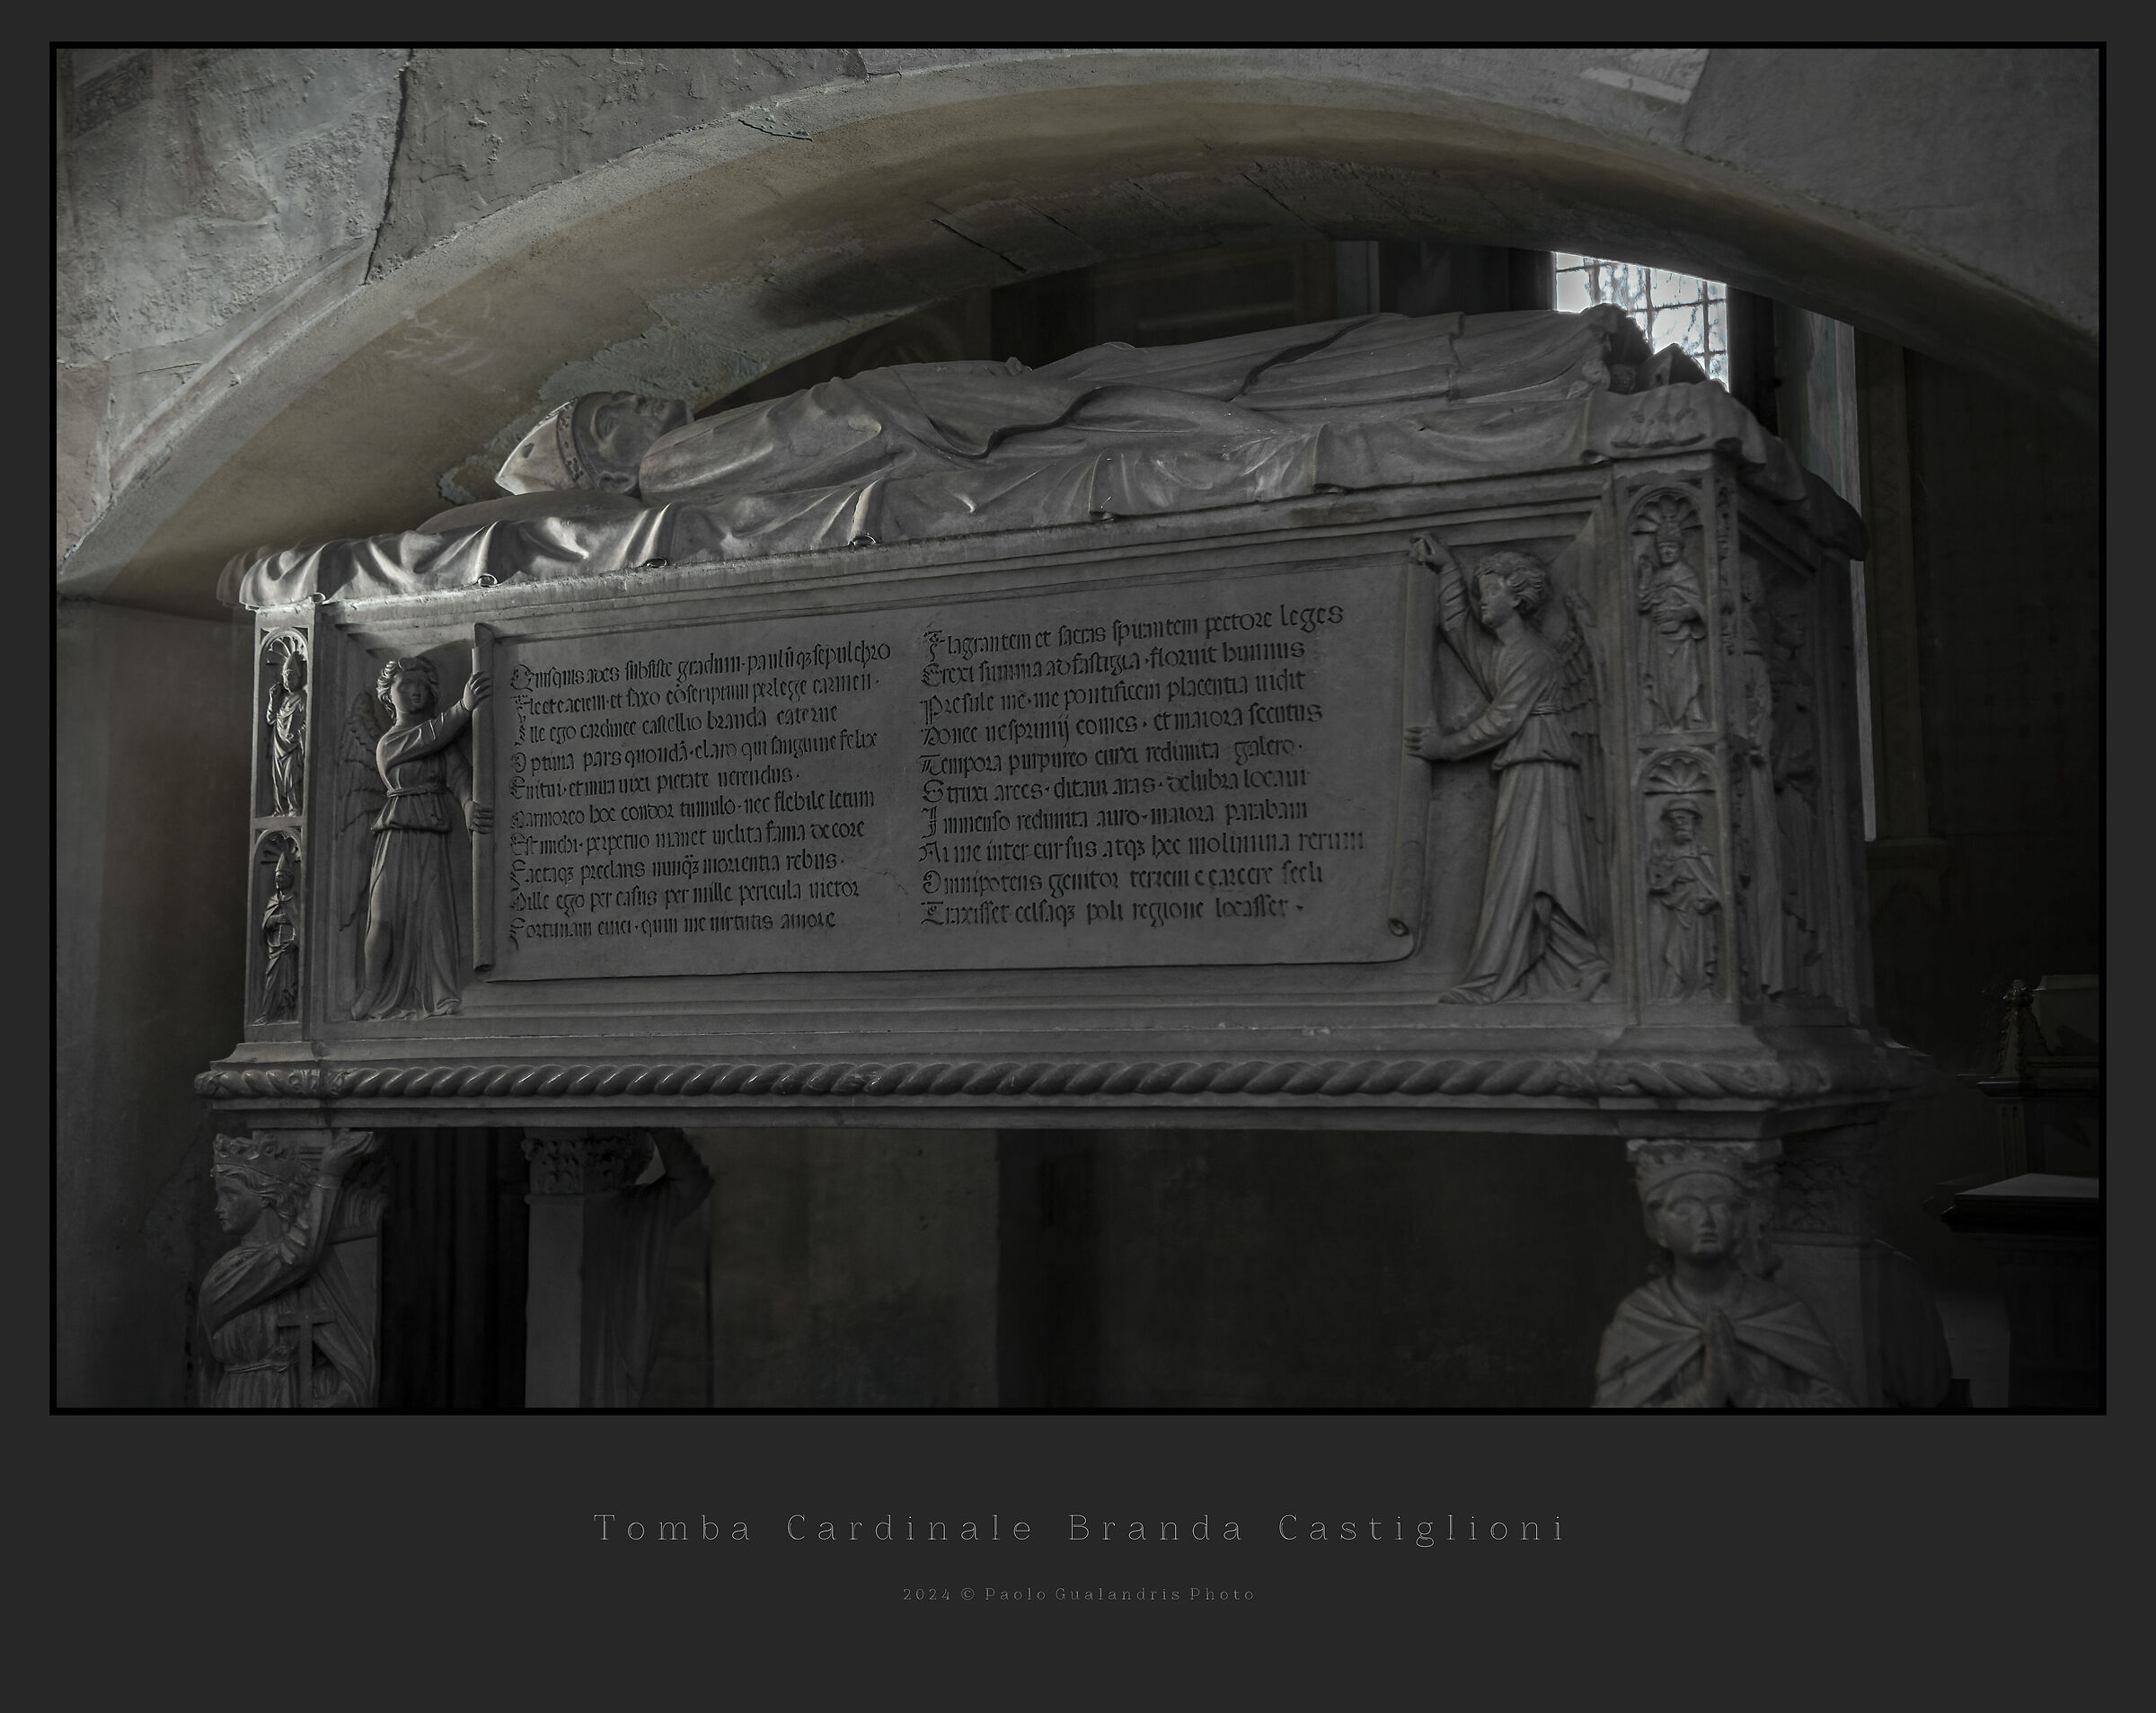 Cardinal Branda Castiglioni's Tomb...